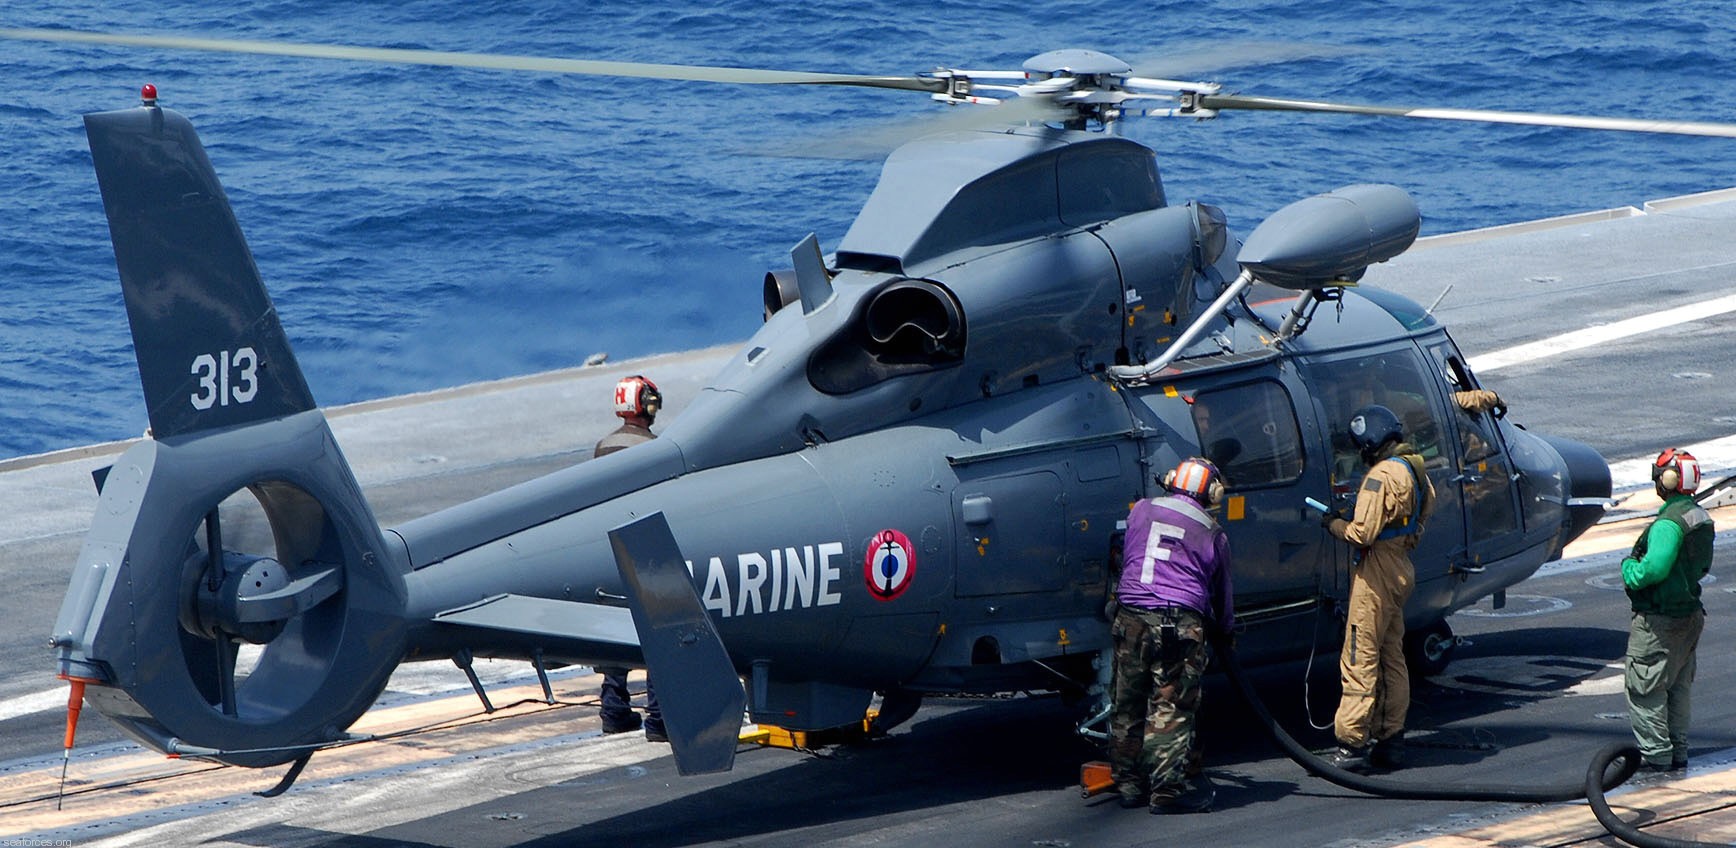 sa 365 dauphin helicopter french navy marine nationale aeronavale flottille 03